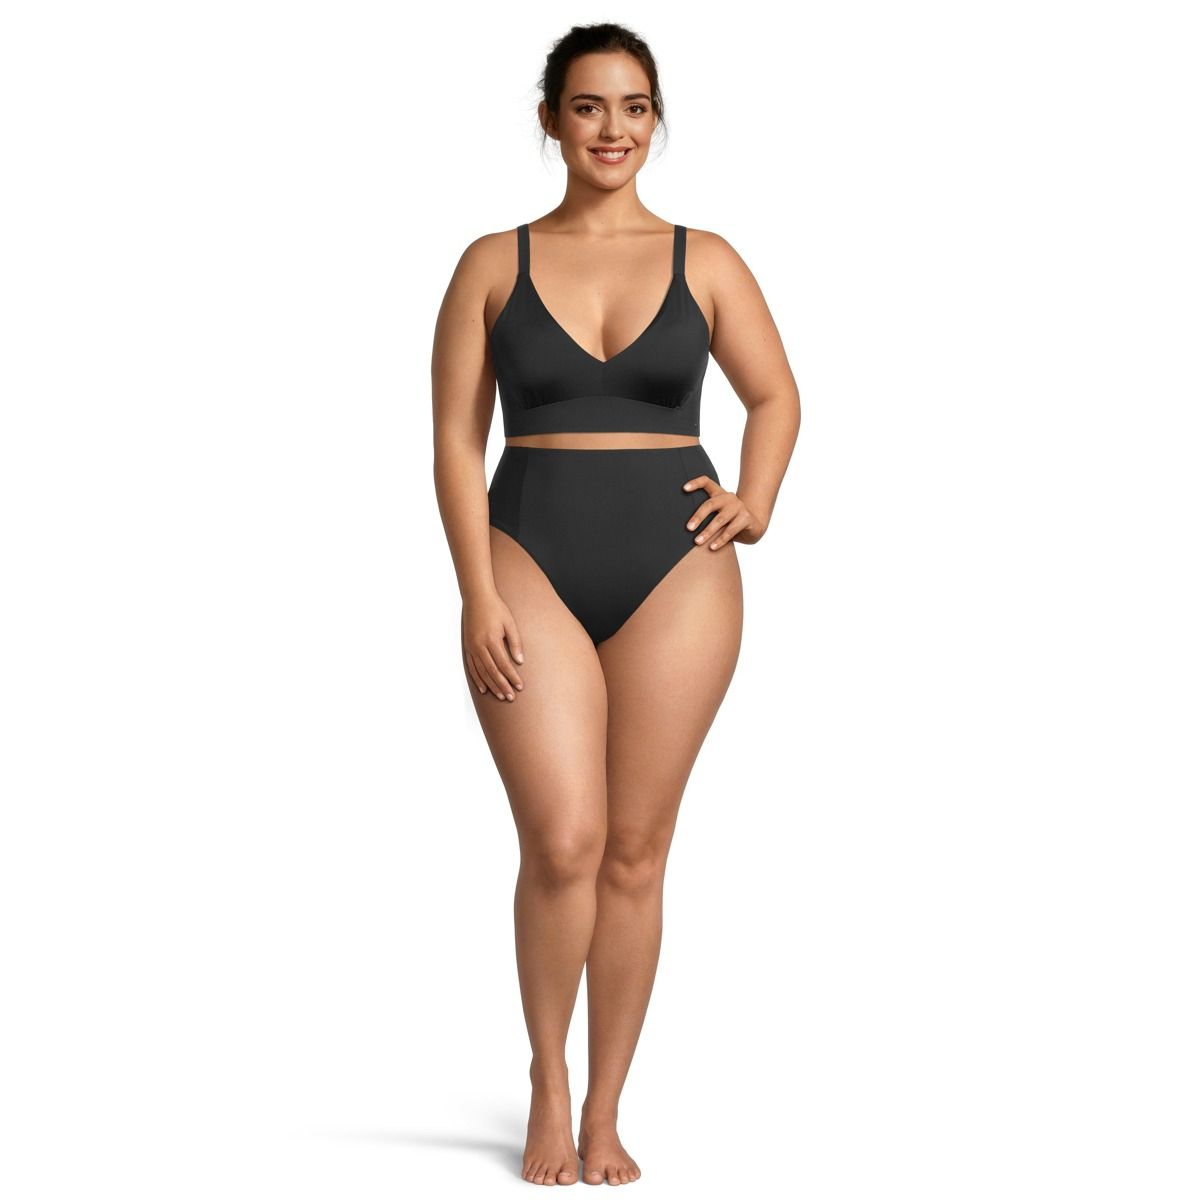 Ripzone Women's Mara Triangle Swim Suit Top